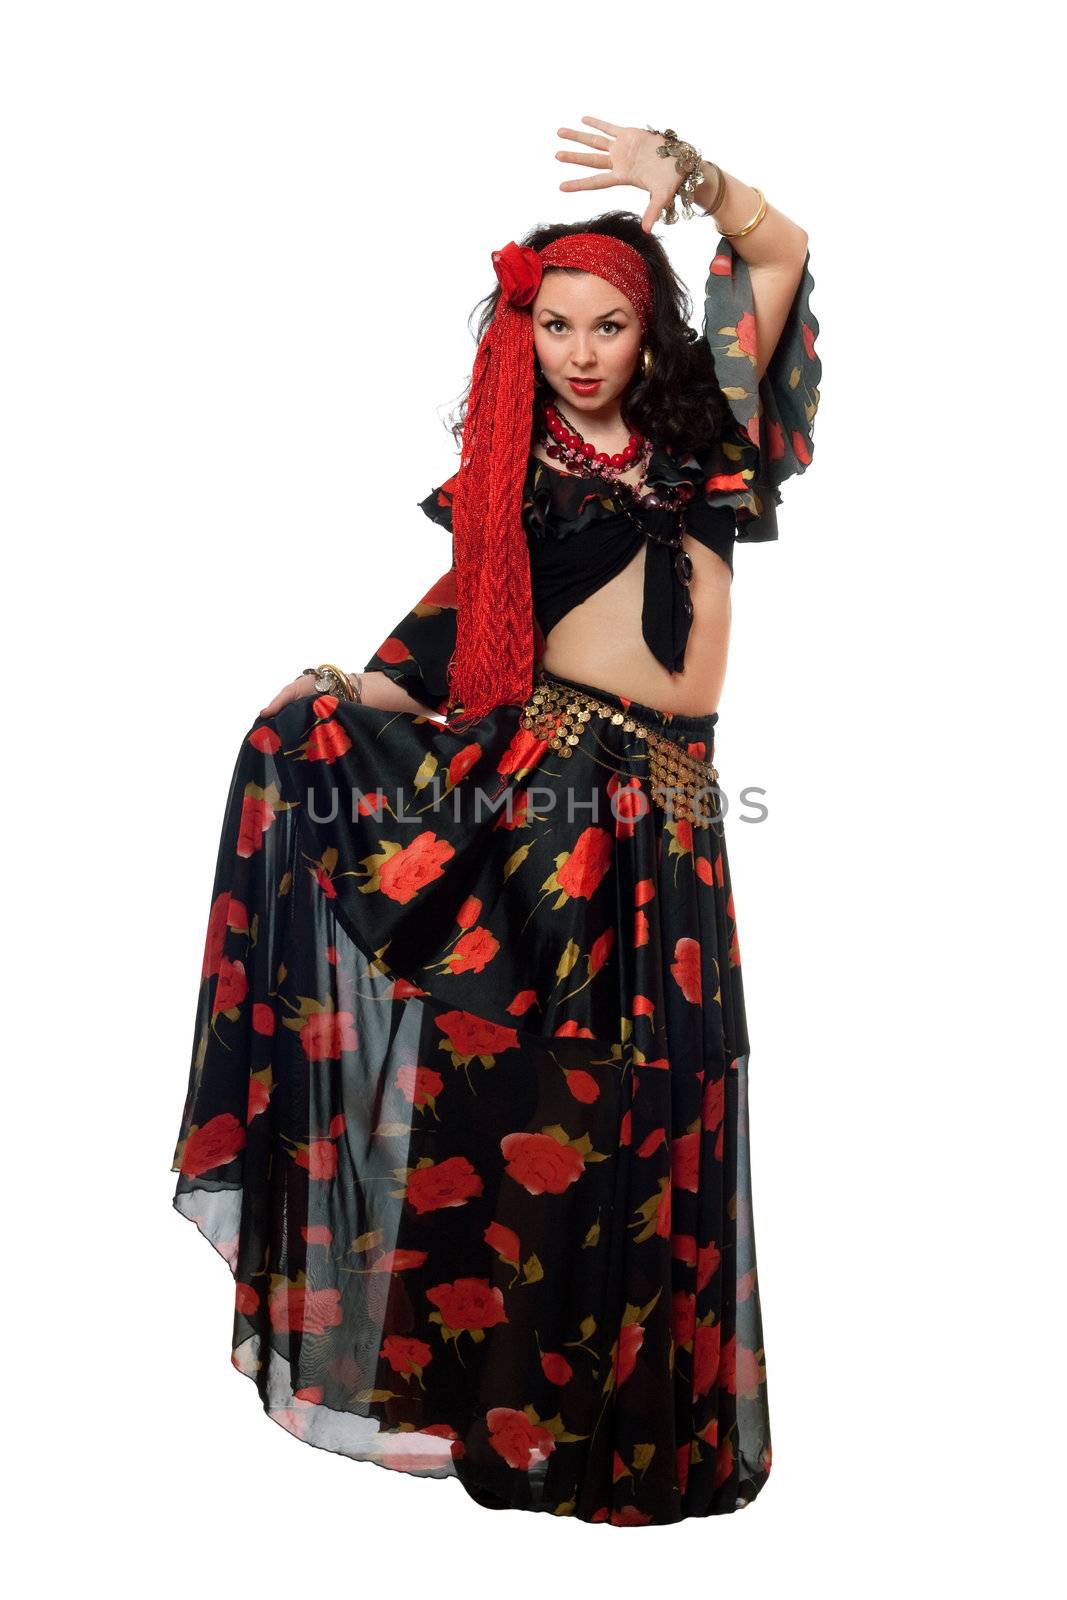 Dancing gypsy woman in a black skirt by acidgrey